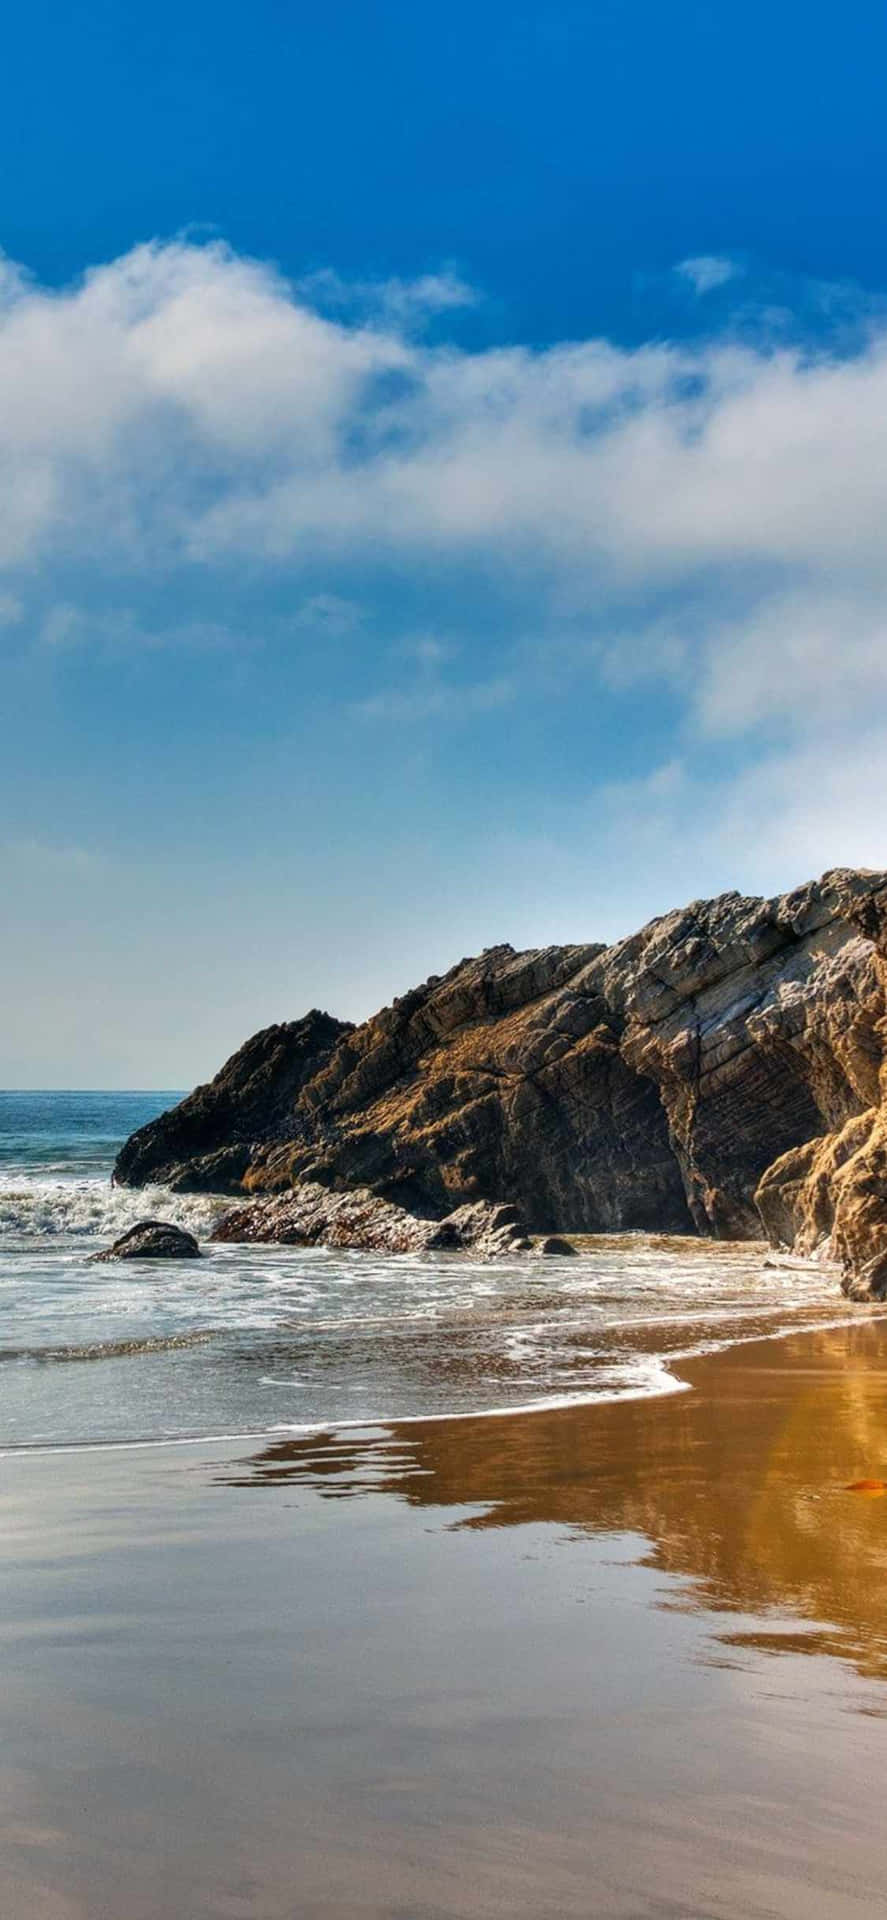 Enjoy a beautiful ocean view with your iPhone Xs Malibu